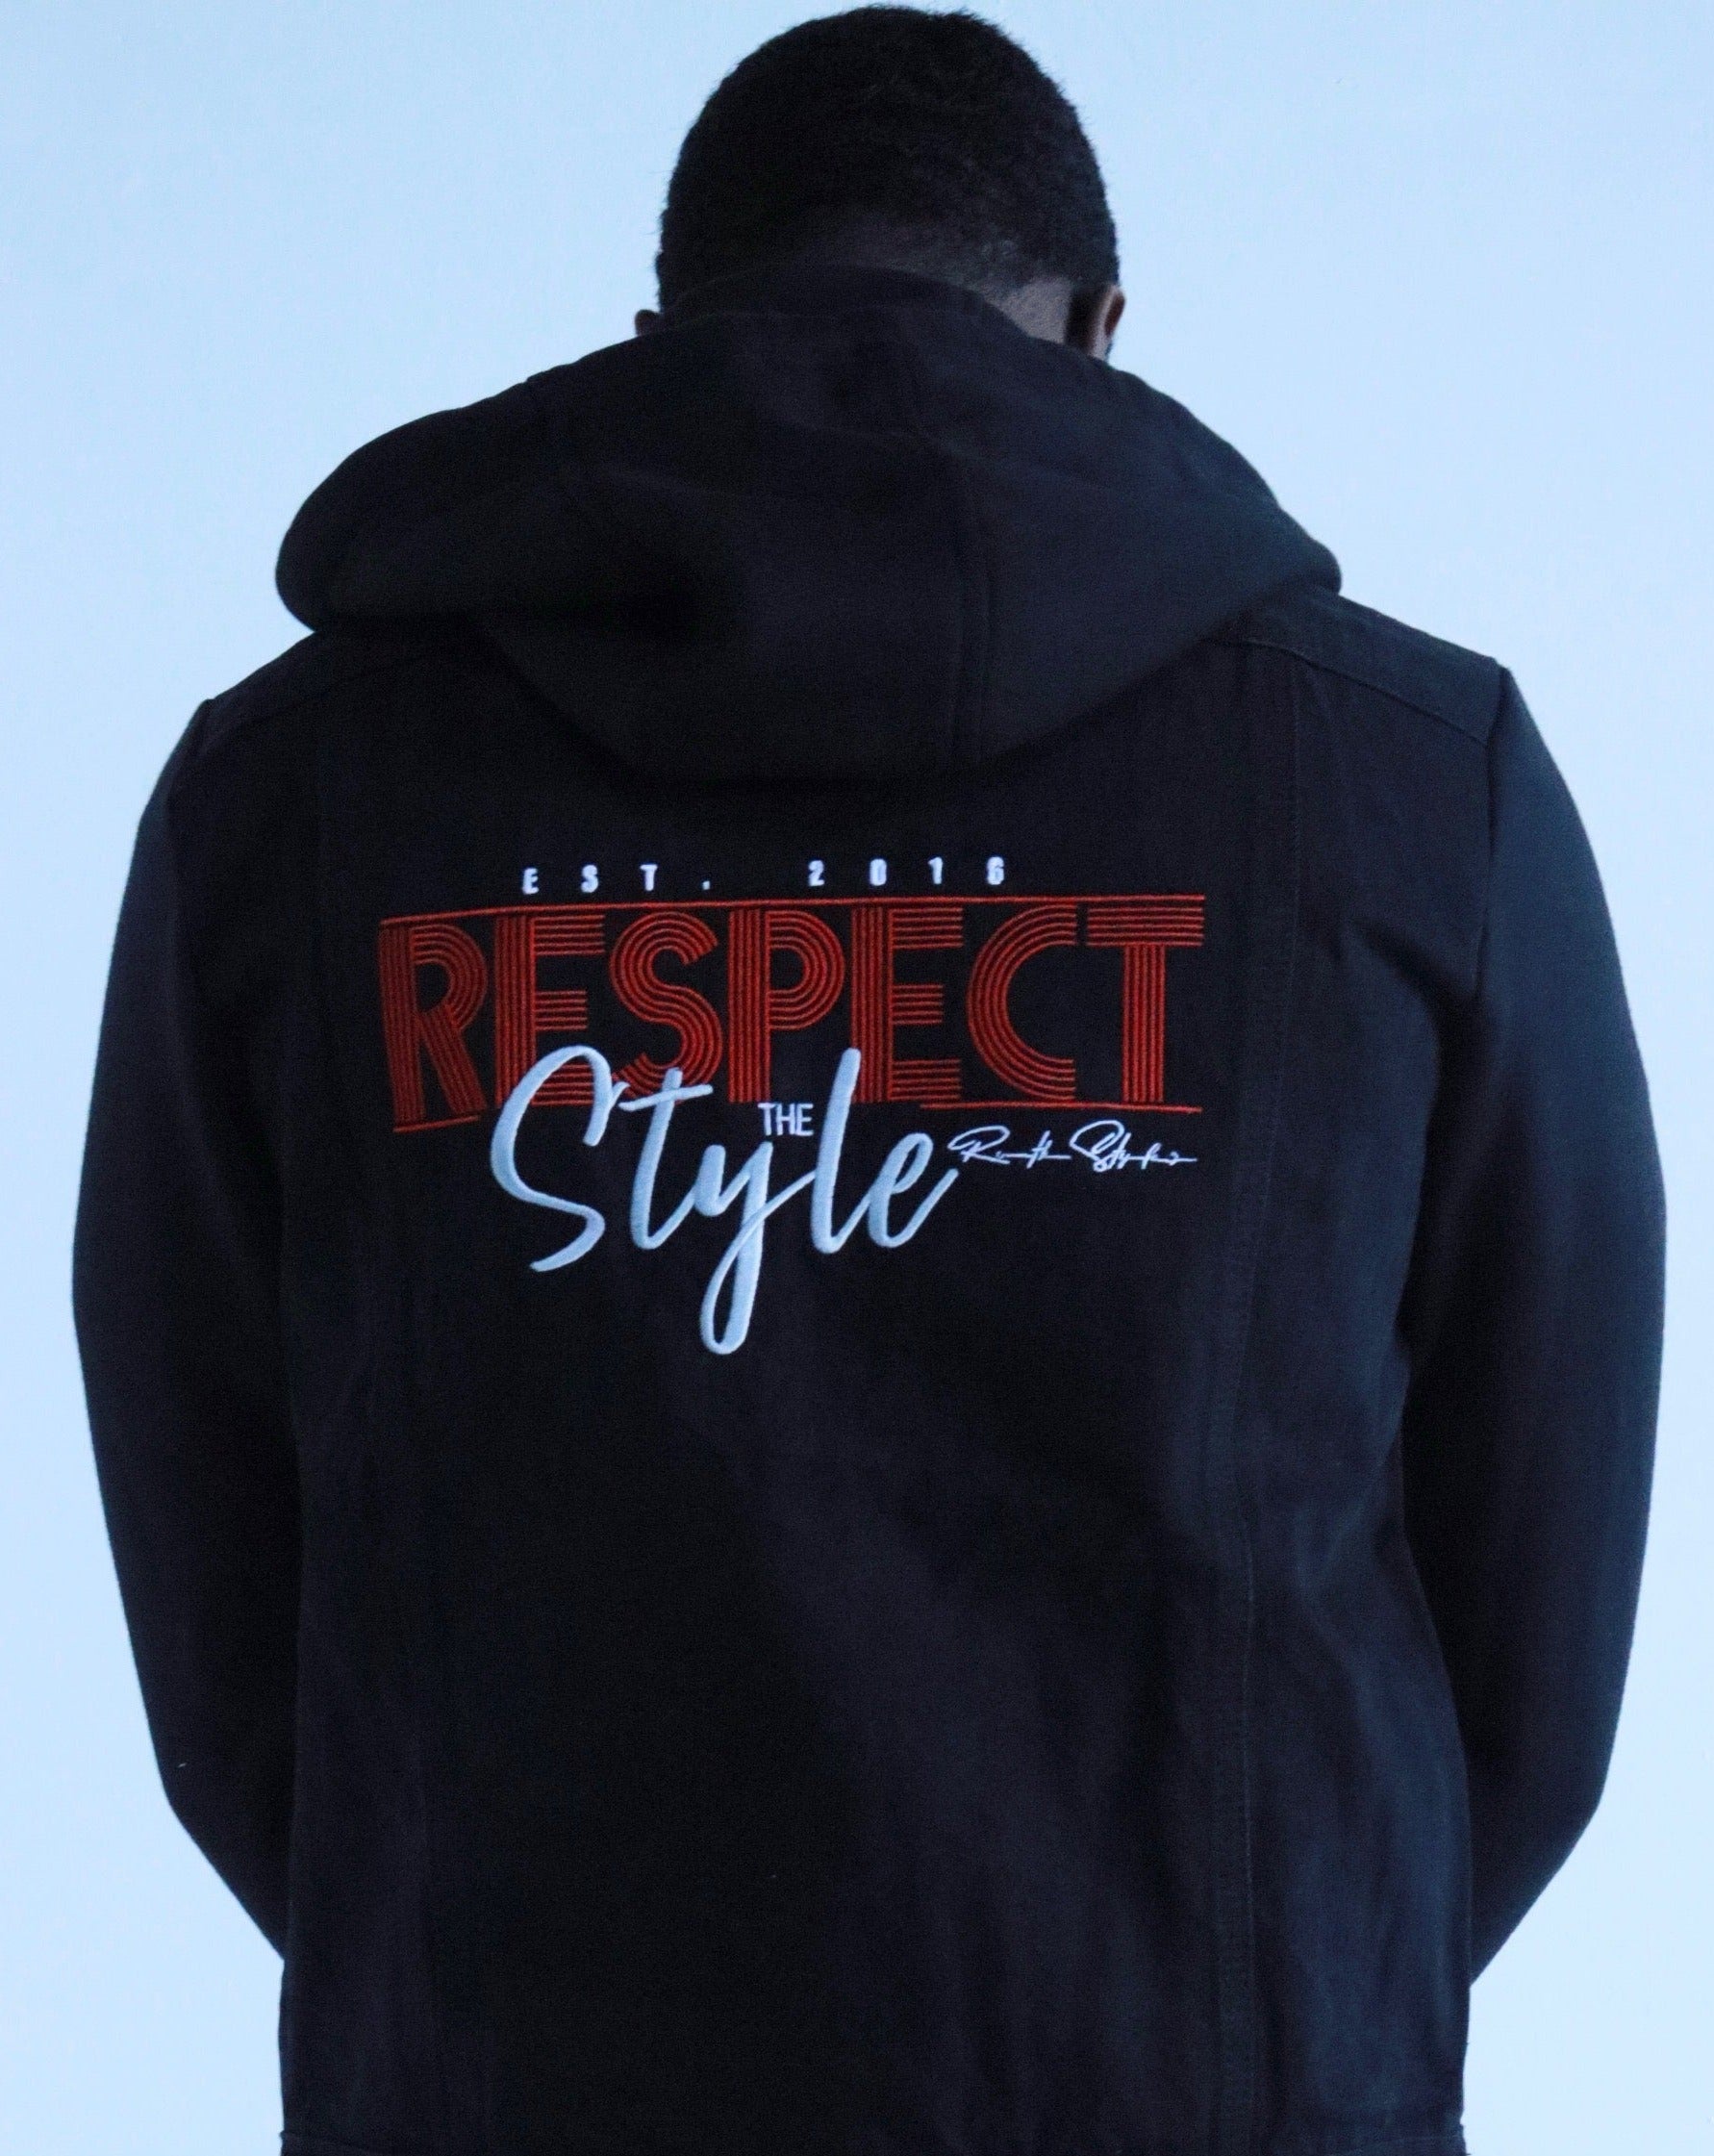 Respect The Style Classic Black Denim Jacket!